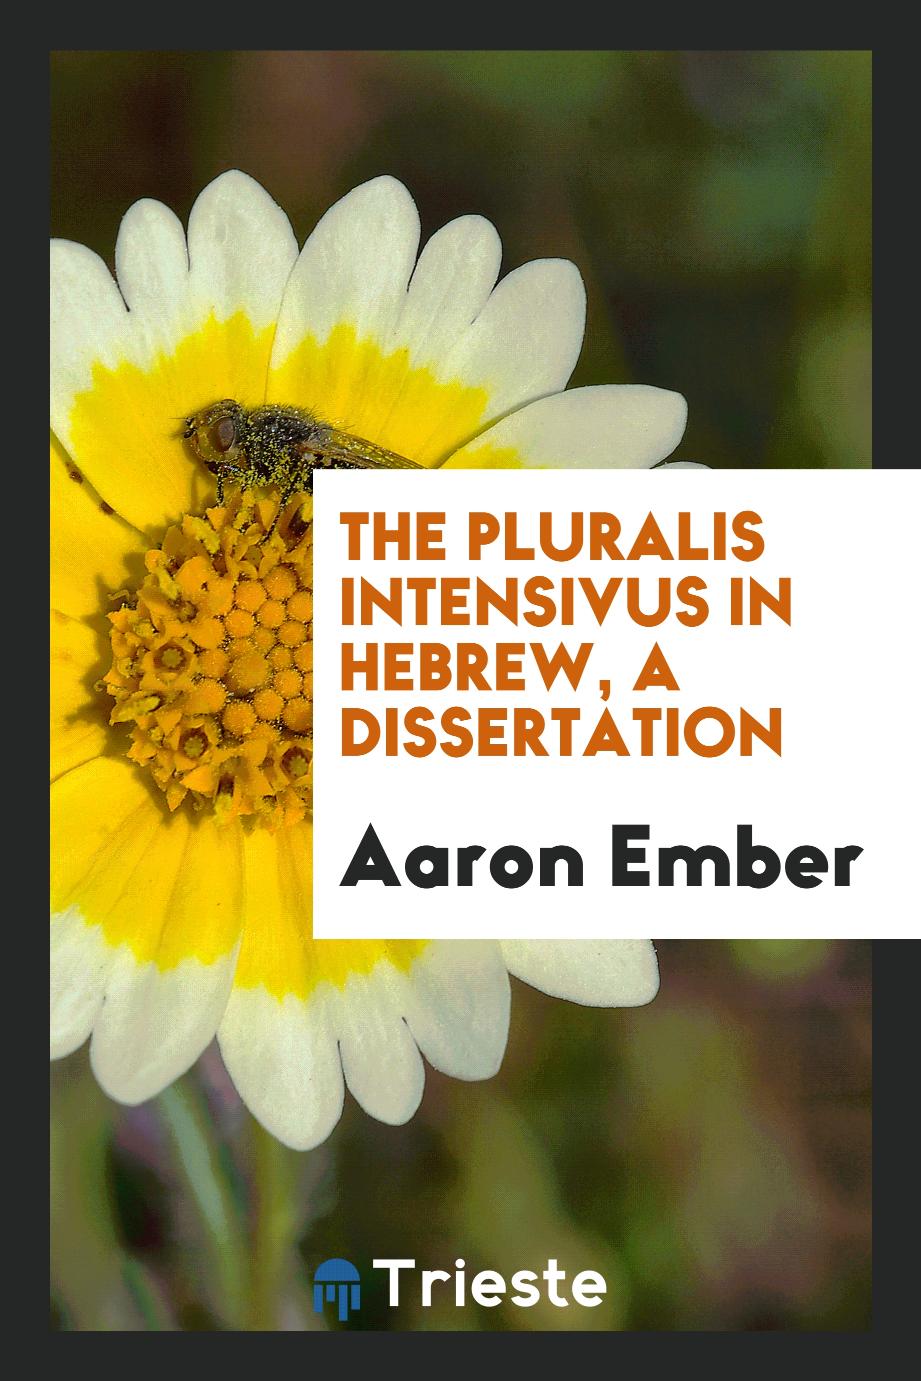 The pluralis intensivus in Hebrew, a dissertation